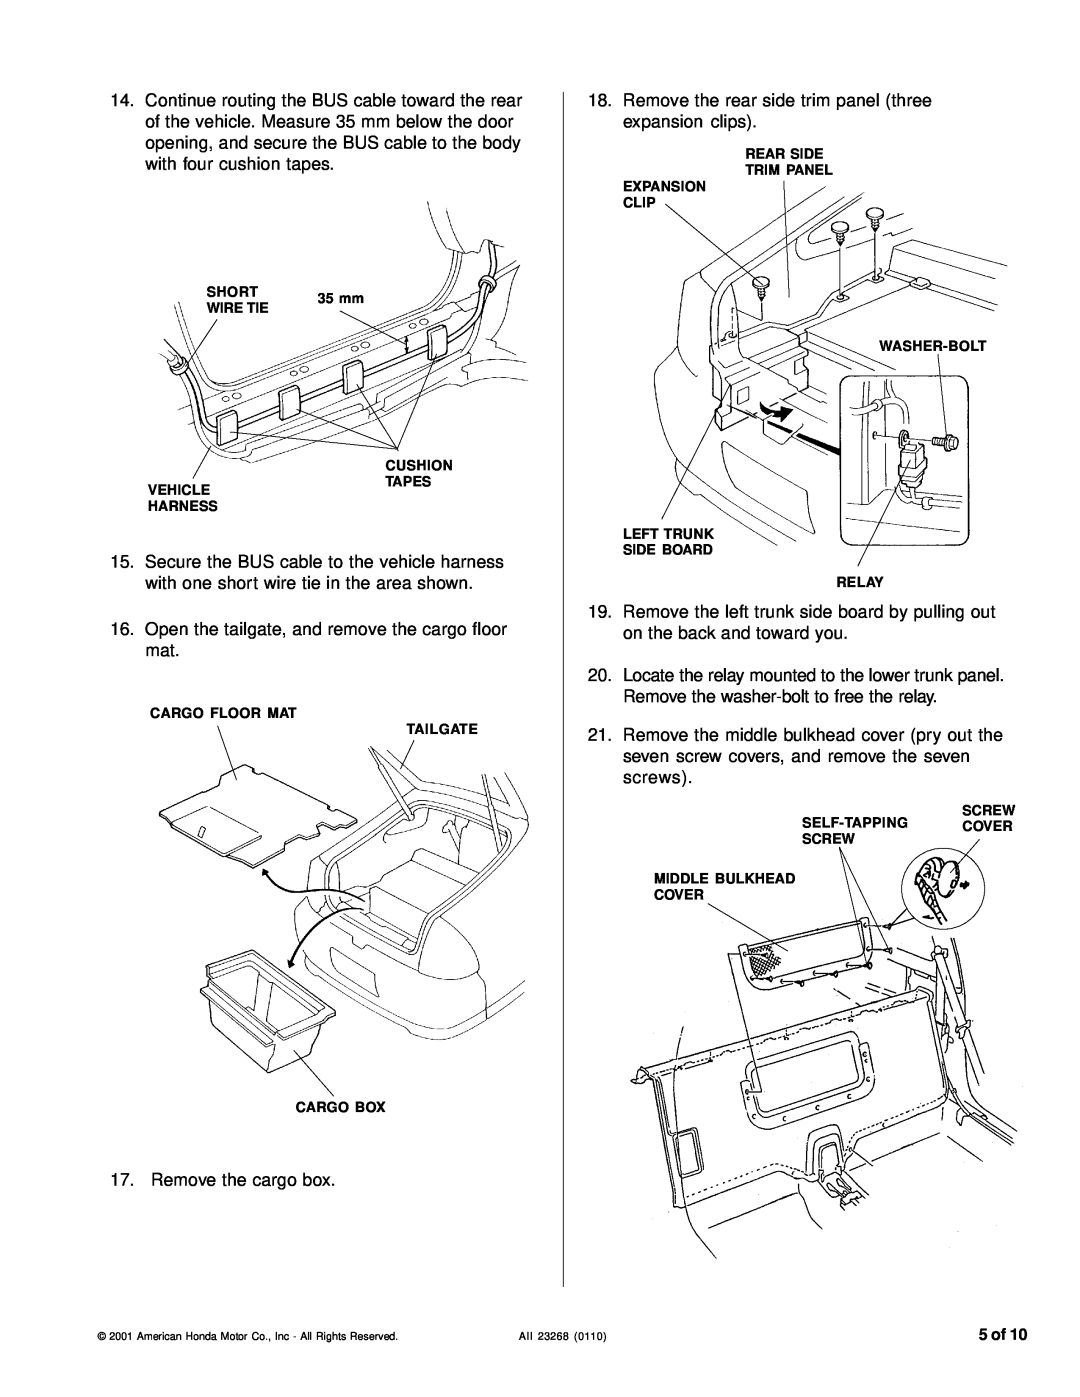 Honda Power Equipment CD Changer installation instructions Remove the cargo box 